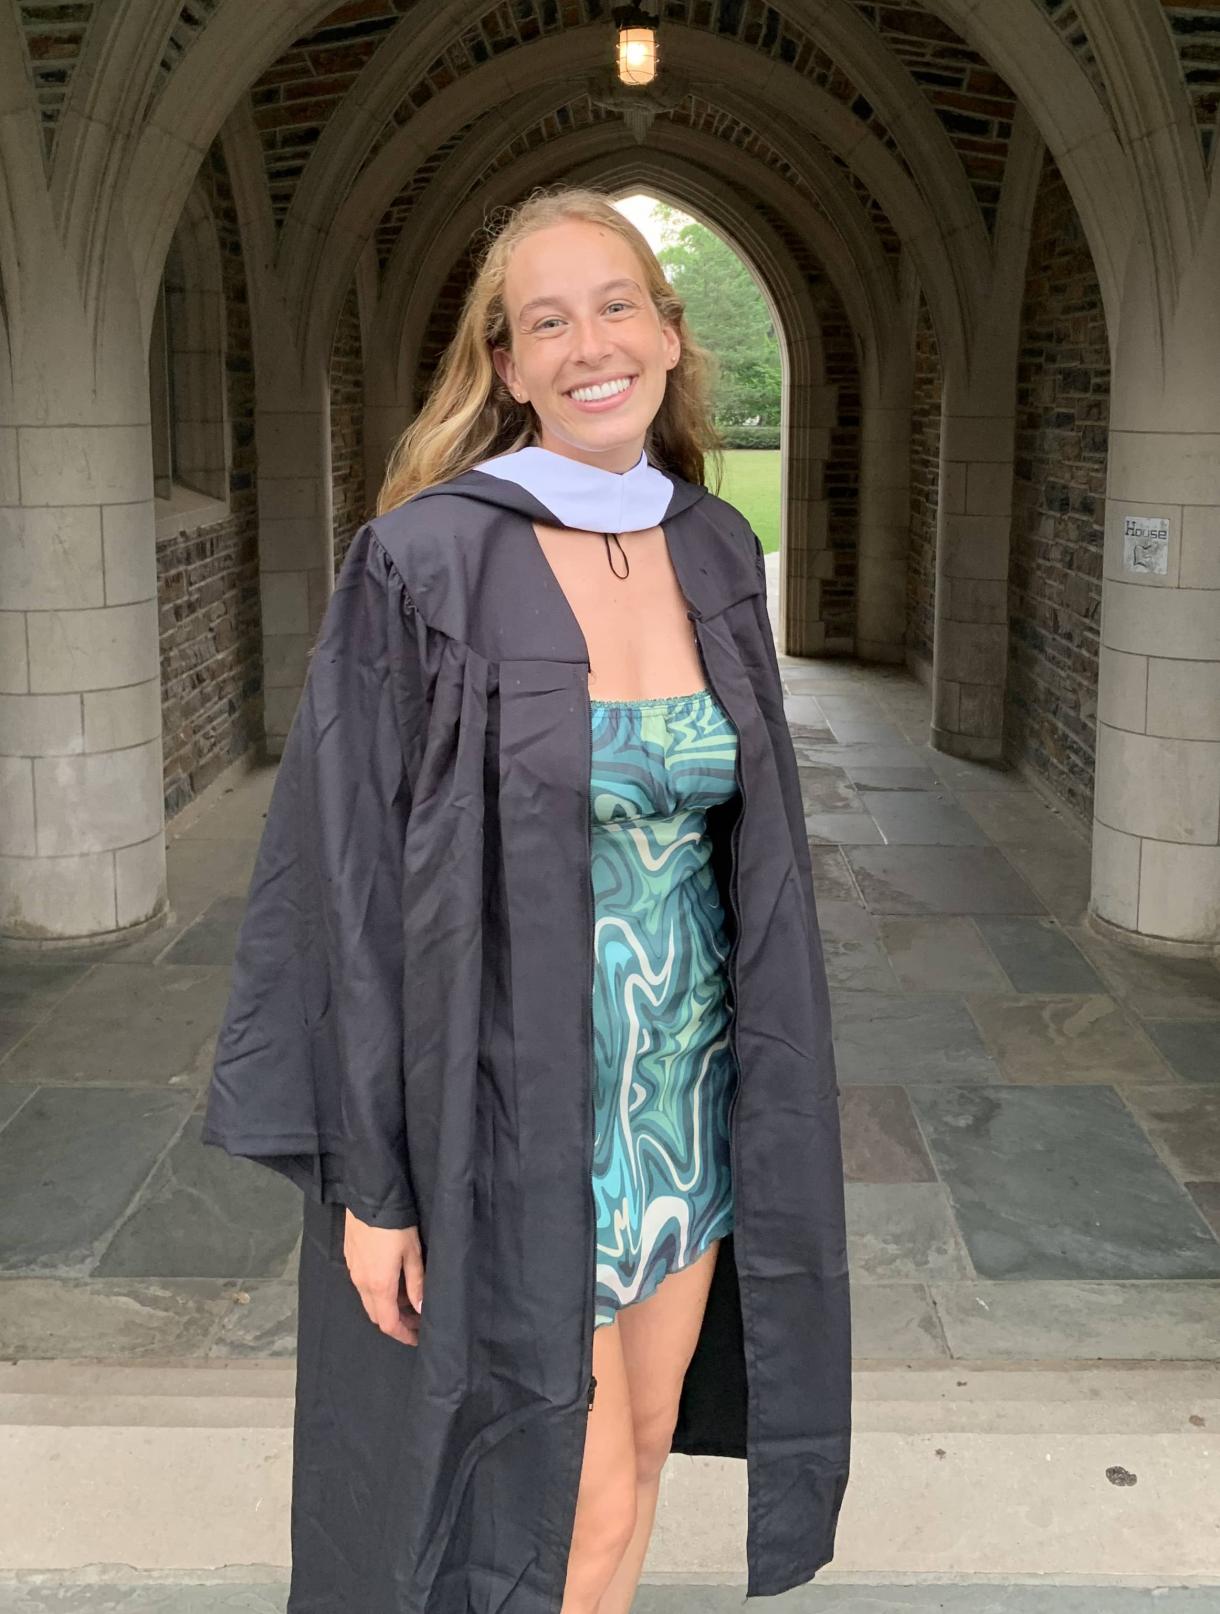 Woman, graduation gown, posing near Duke arches